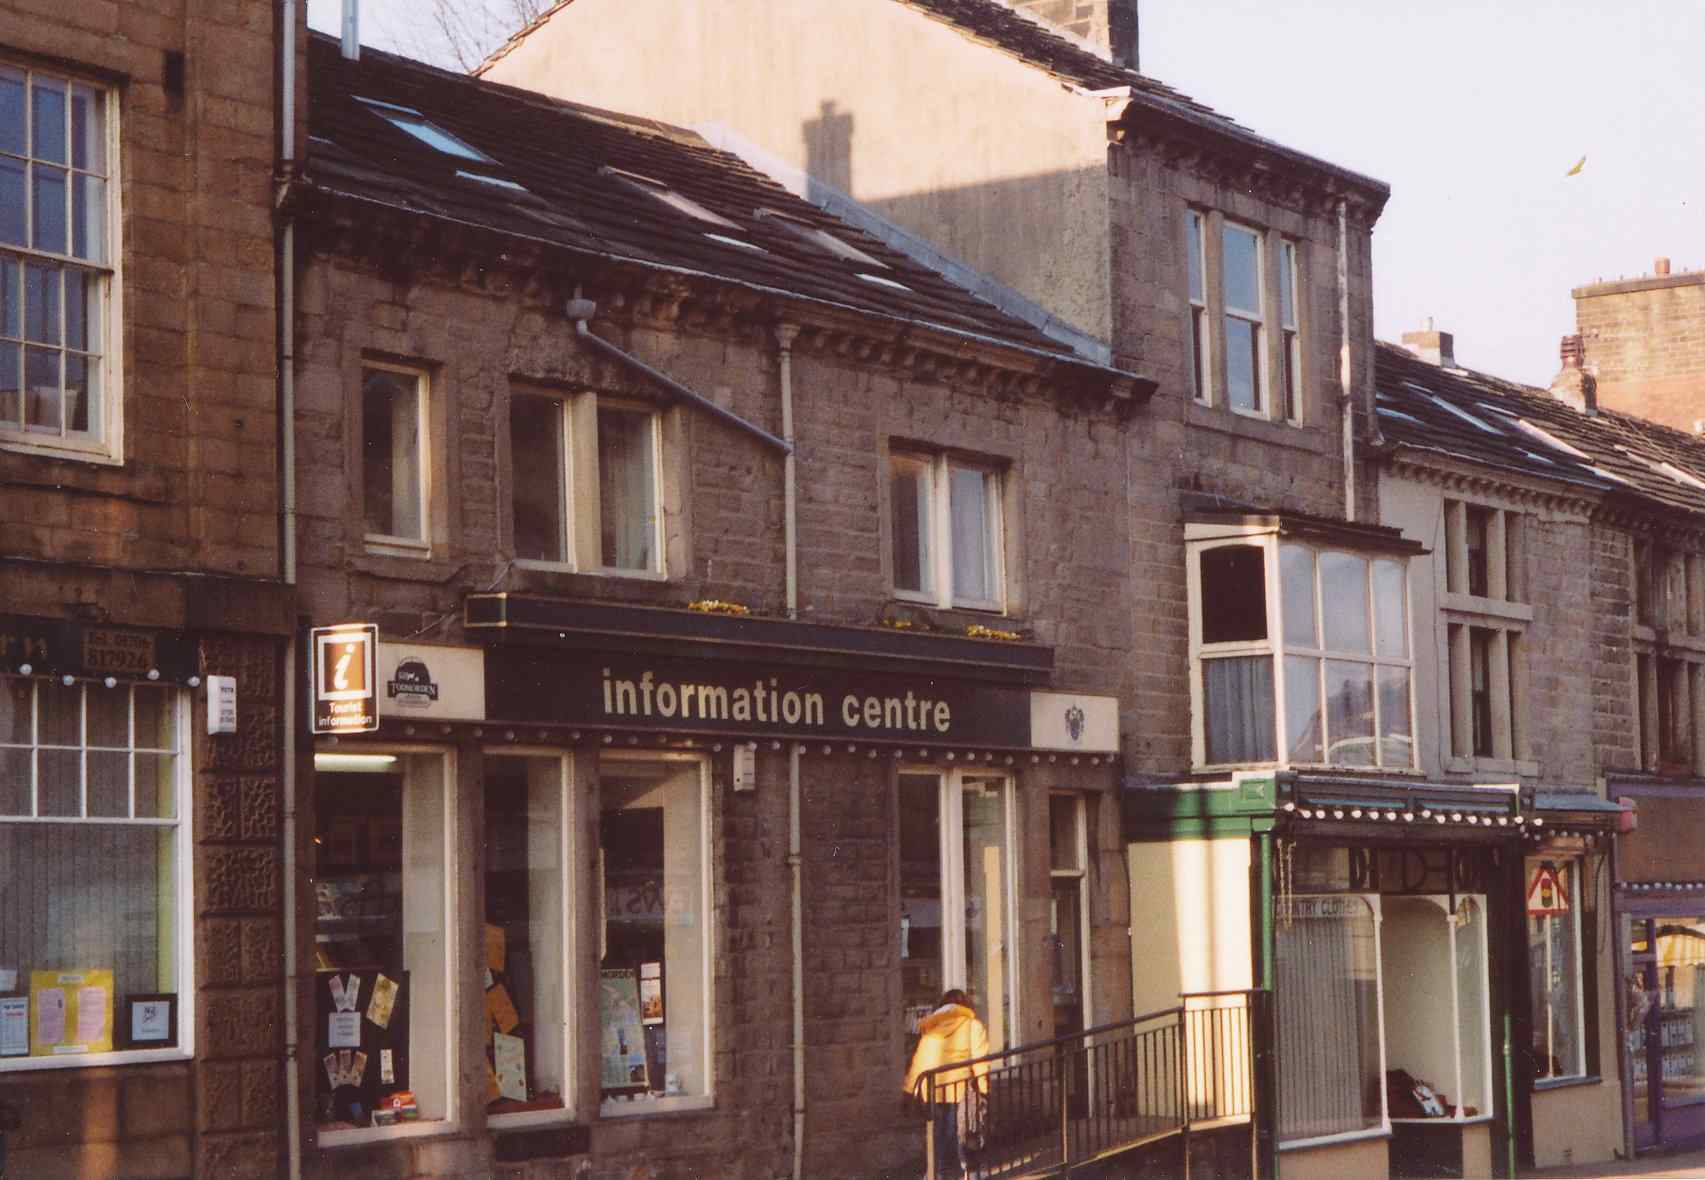 15-17 Burnley Road, Todmorden; close-up of Information Centre